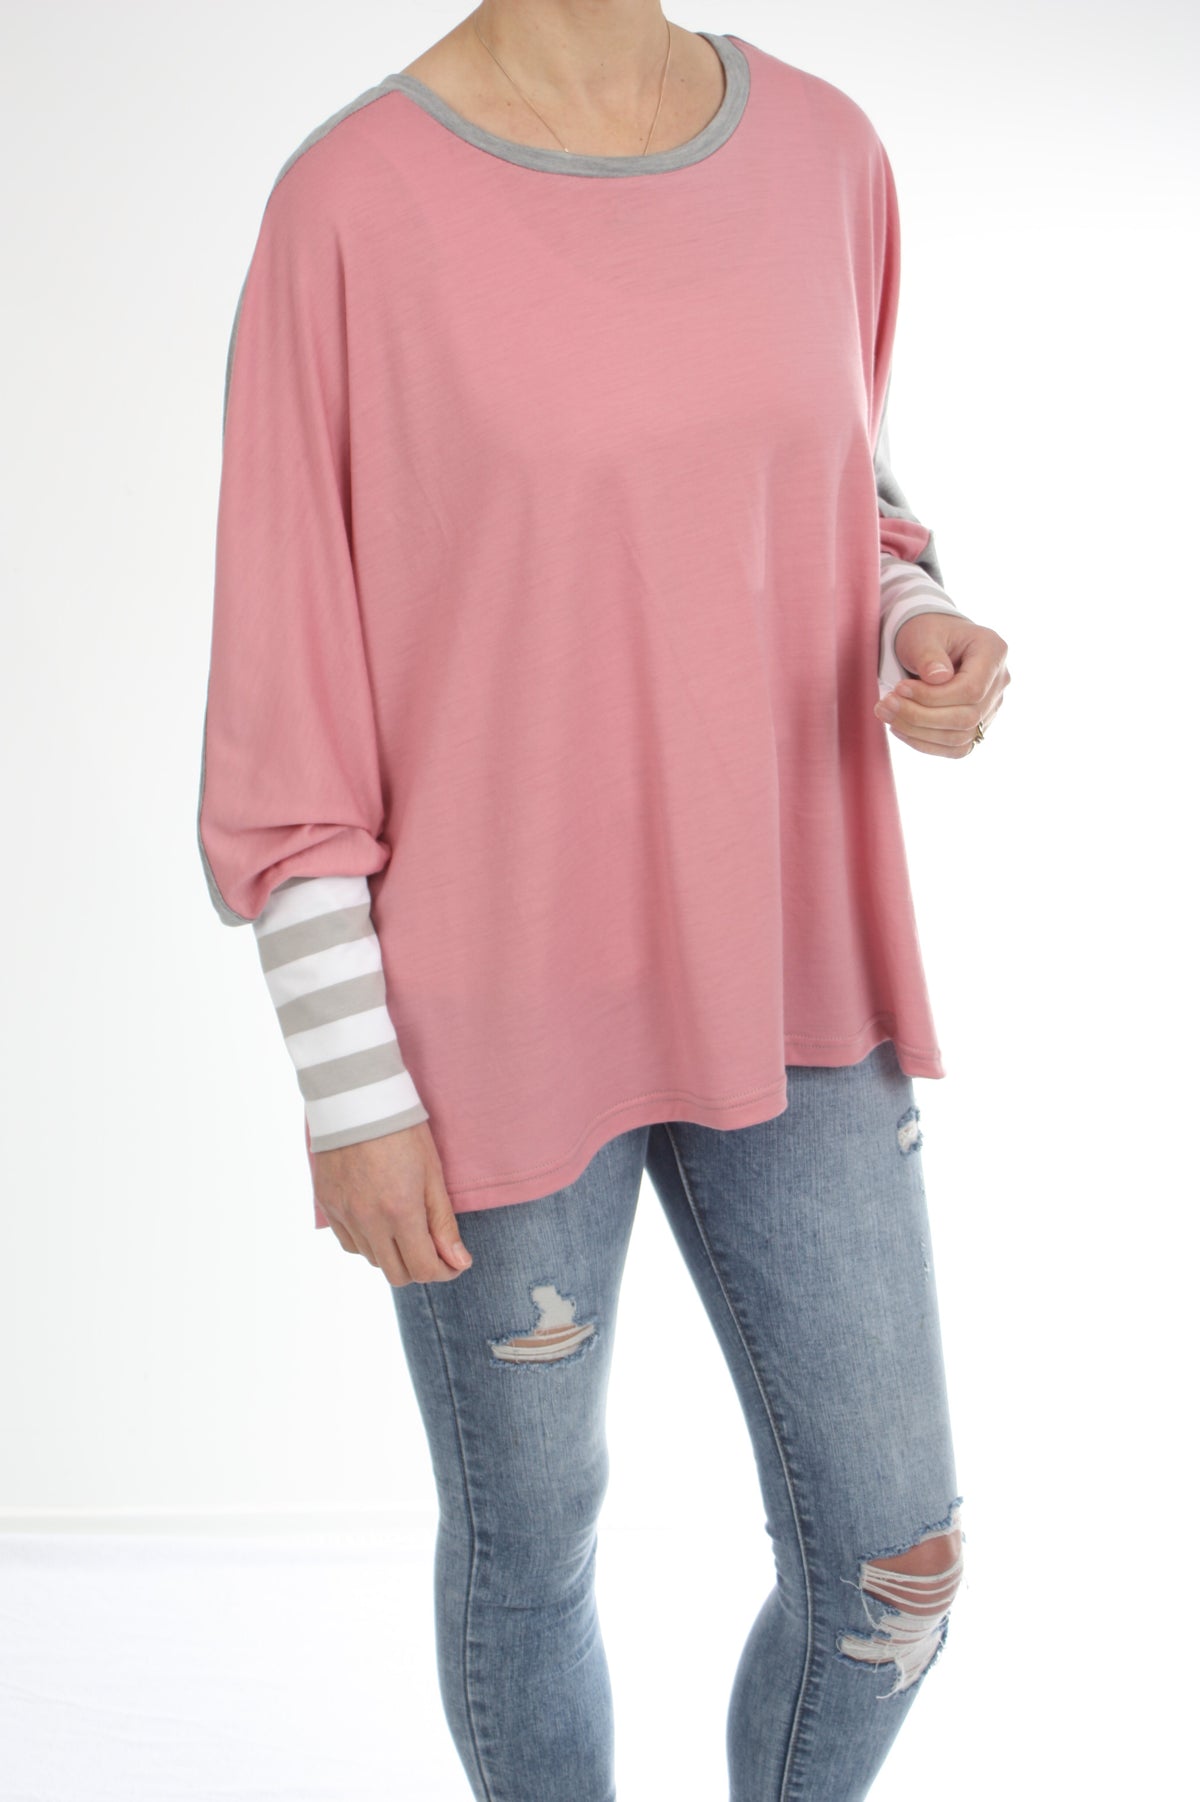 Alexa Top - Merino - Reversible Pink/Grey - Thin Stripe Cuff - Pre-Order